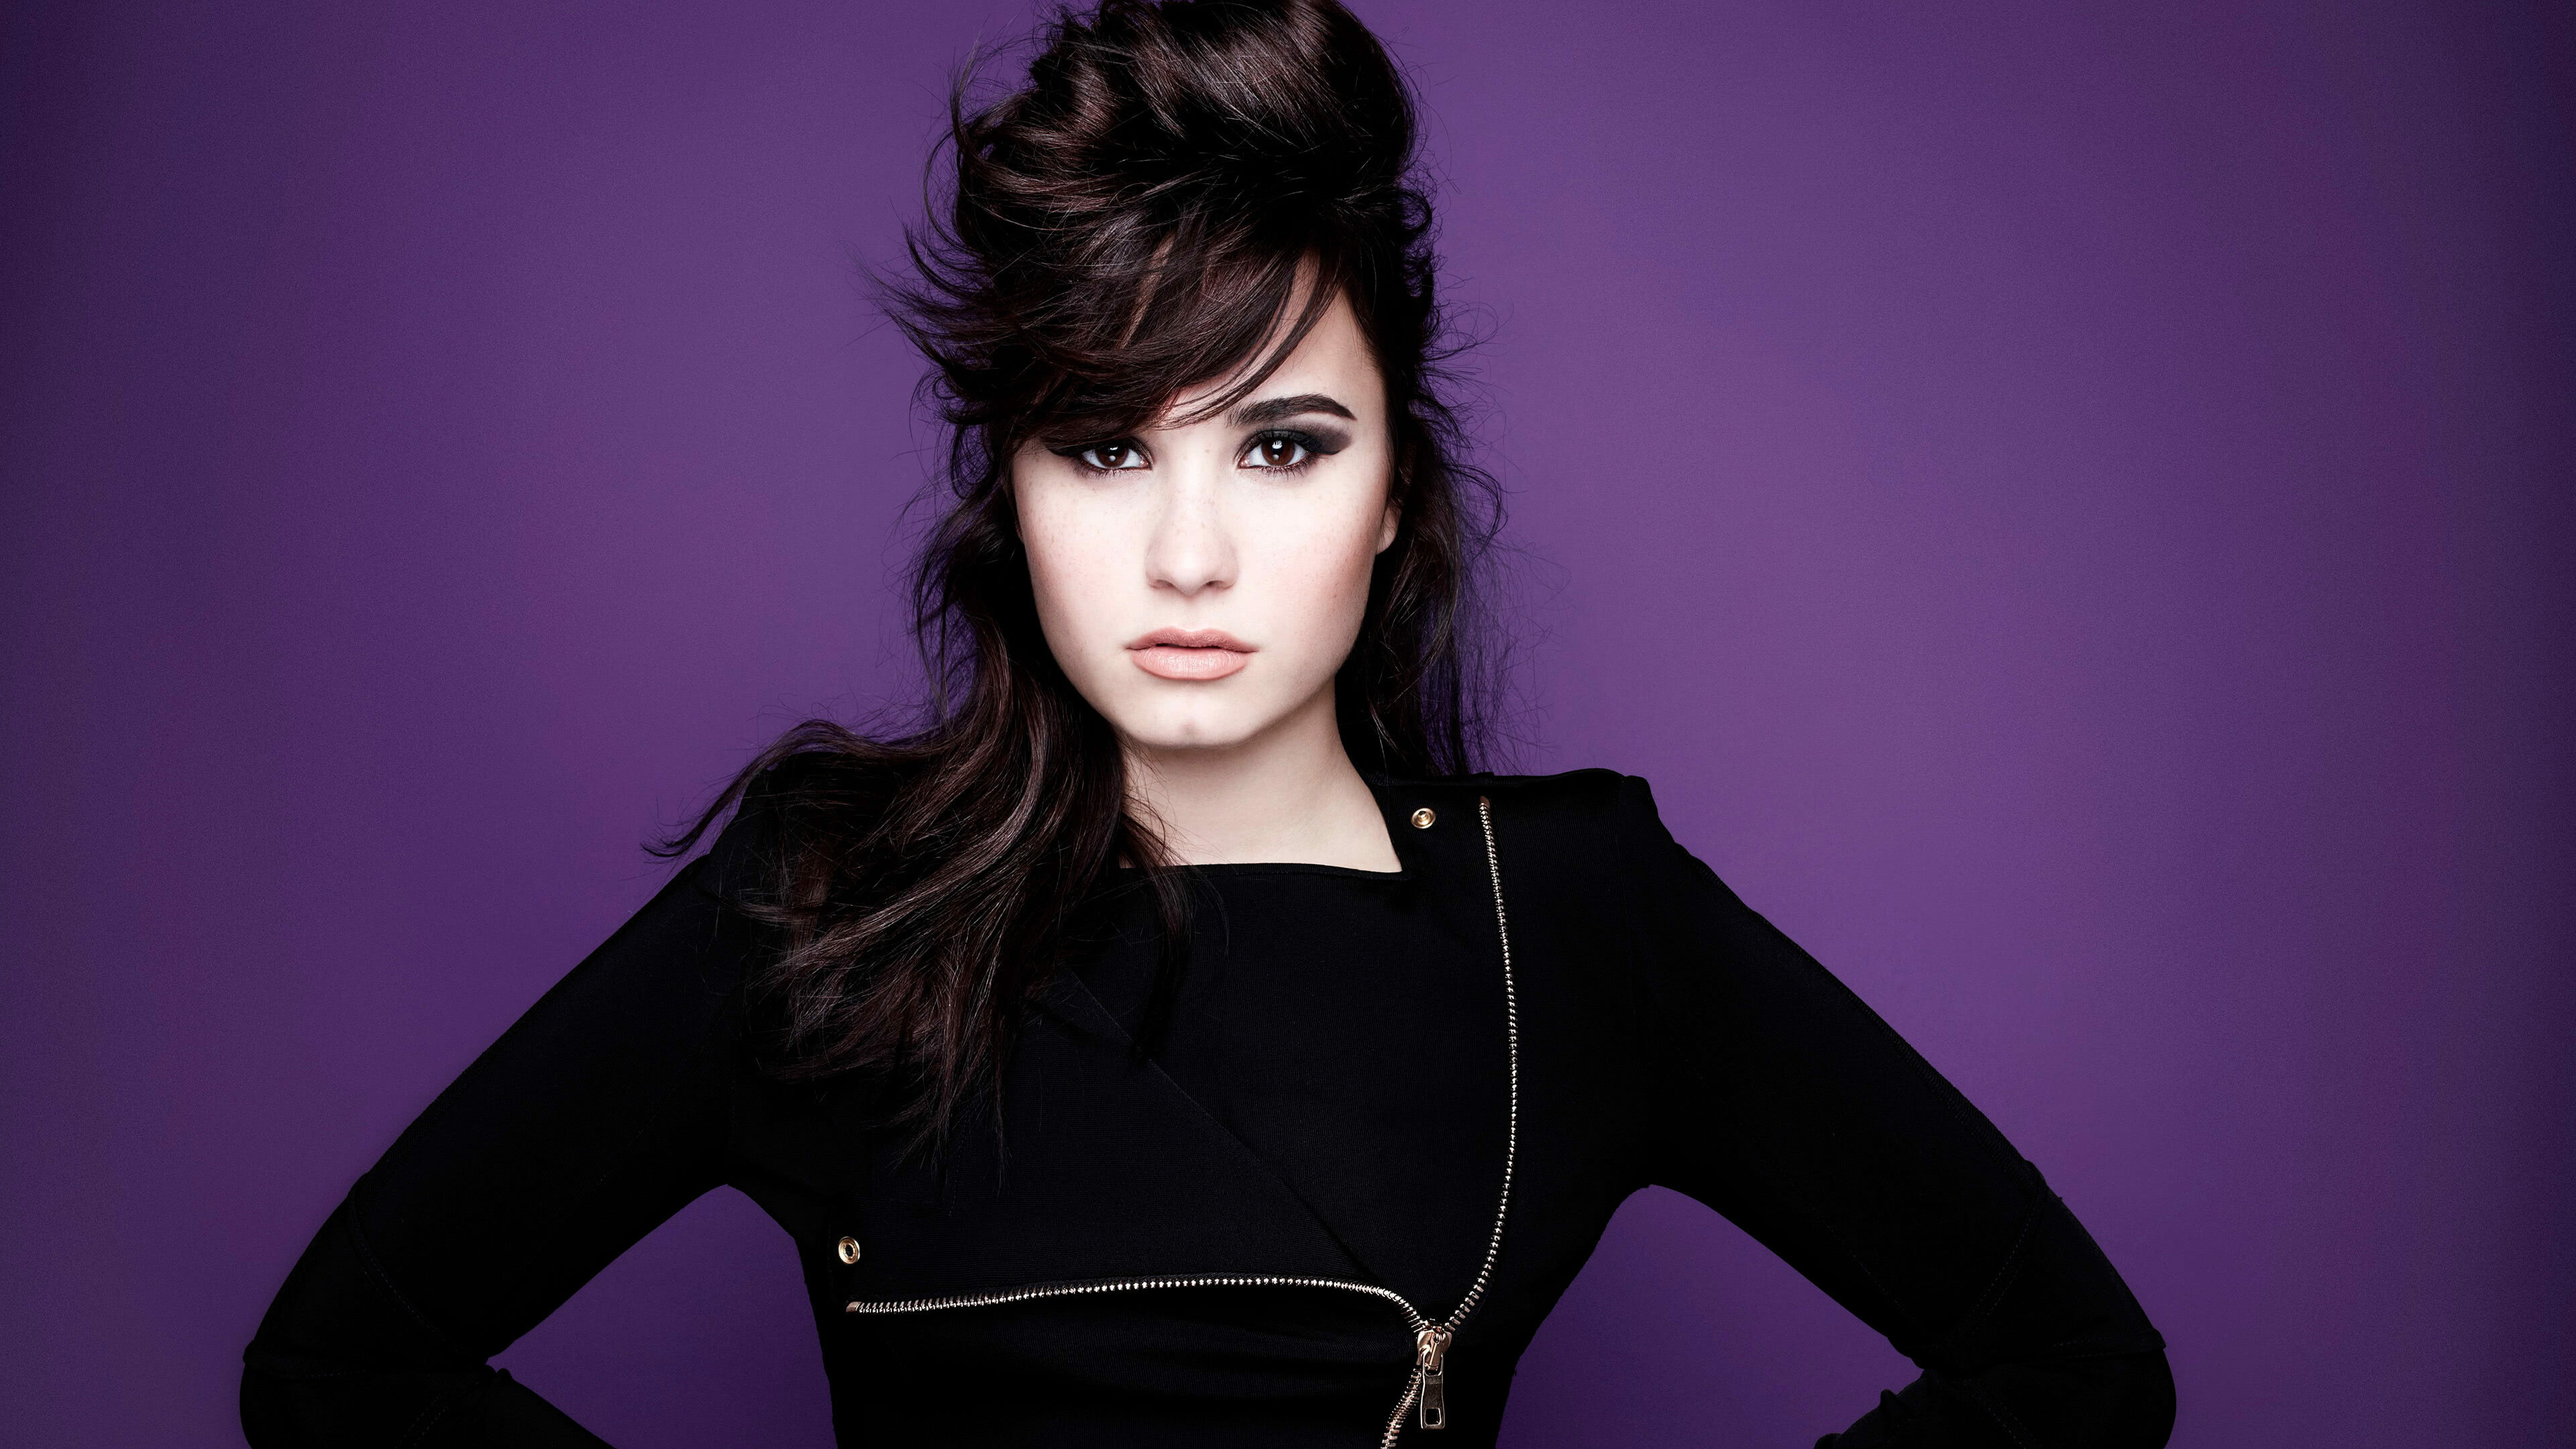 Demi Lovato: "This Is Me", a pop rock song featuring Joe Jonas, was released on June 17, 2008. 3840x2160 4K Wallpaper.